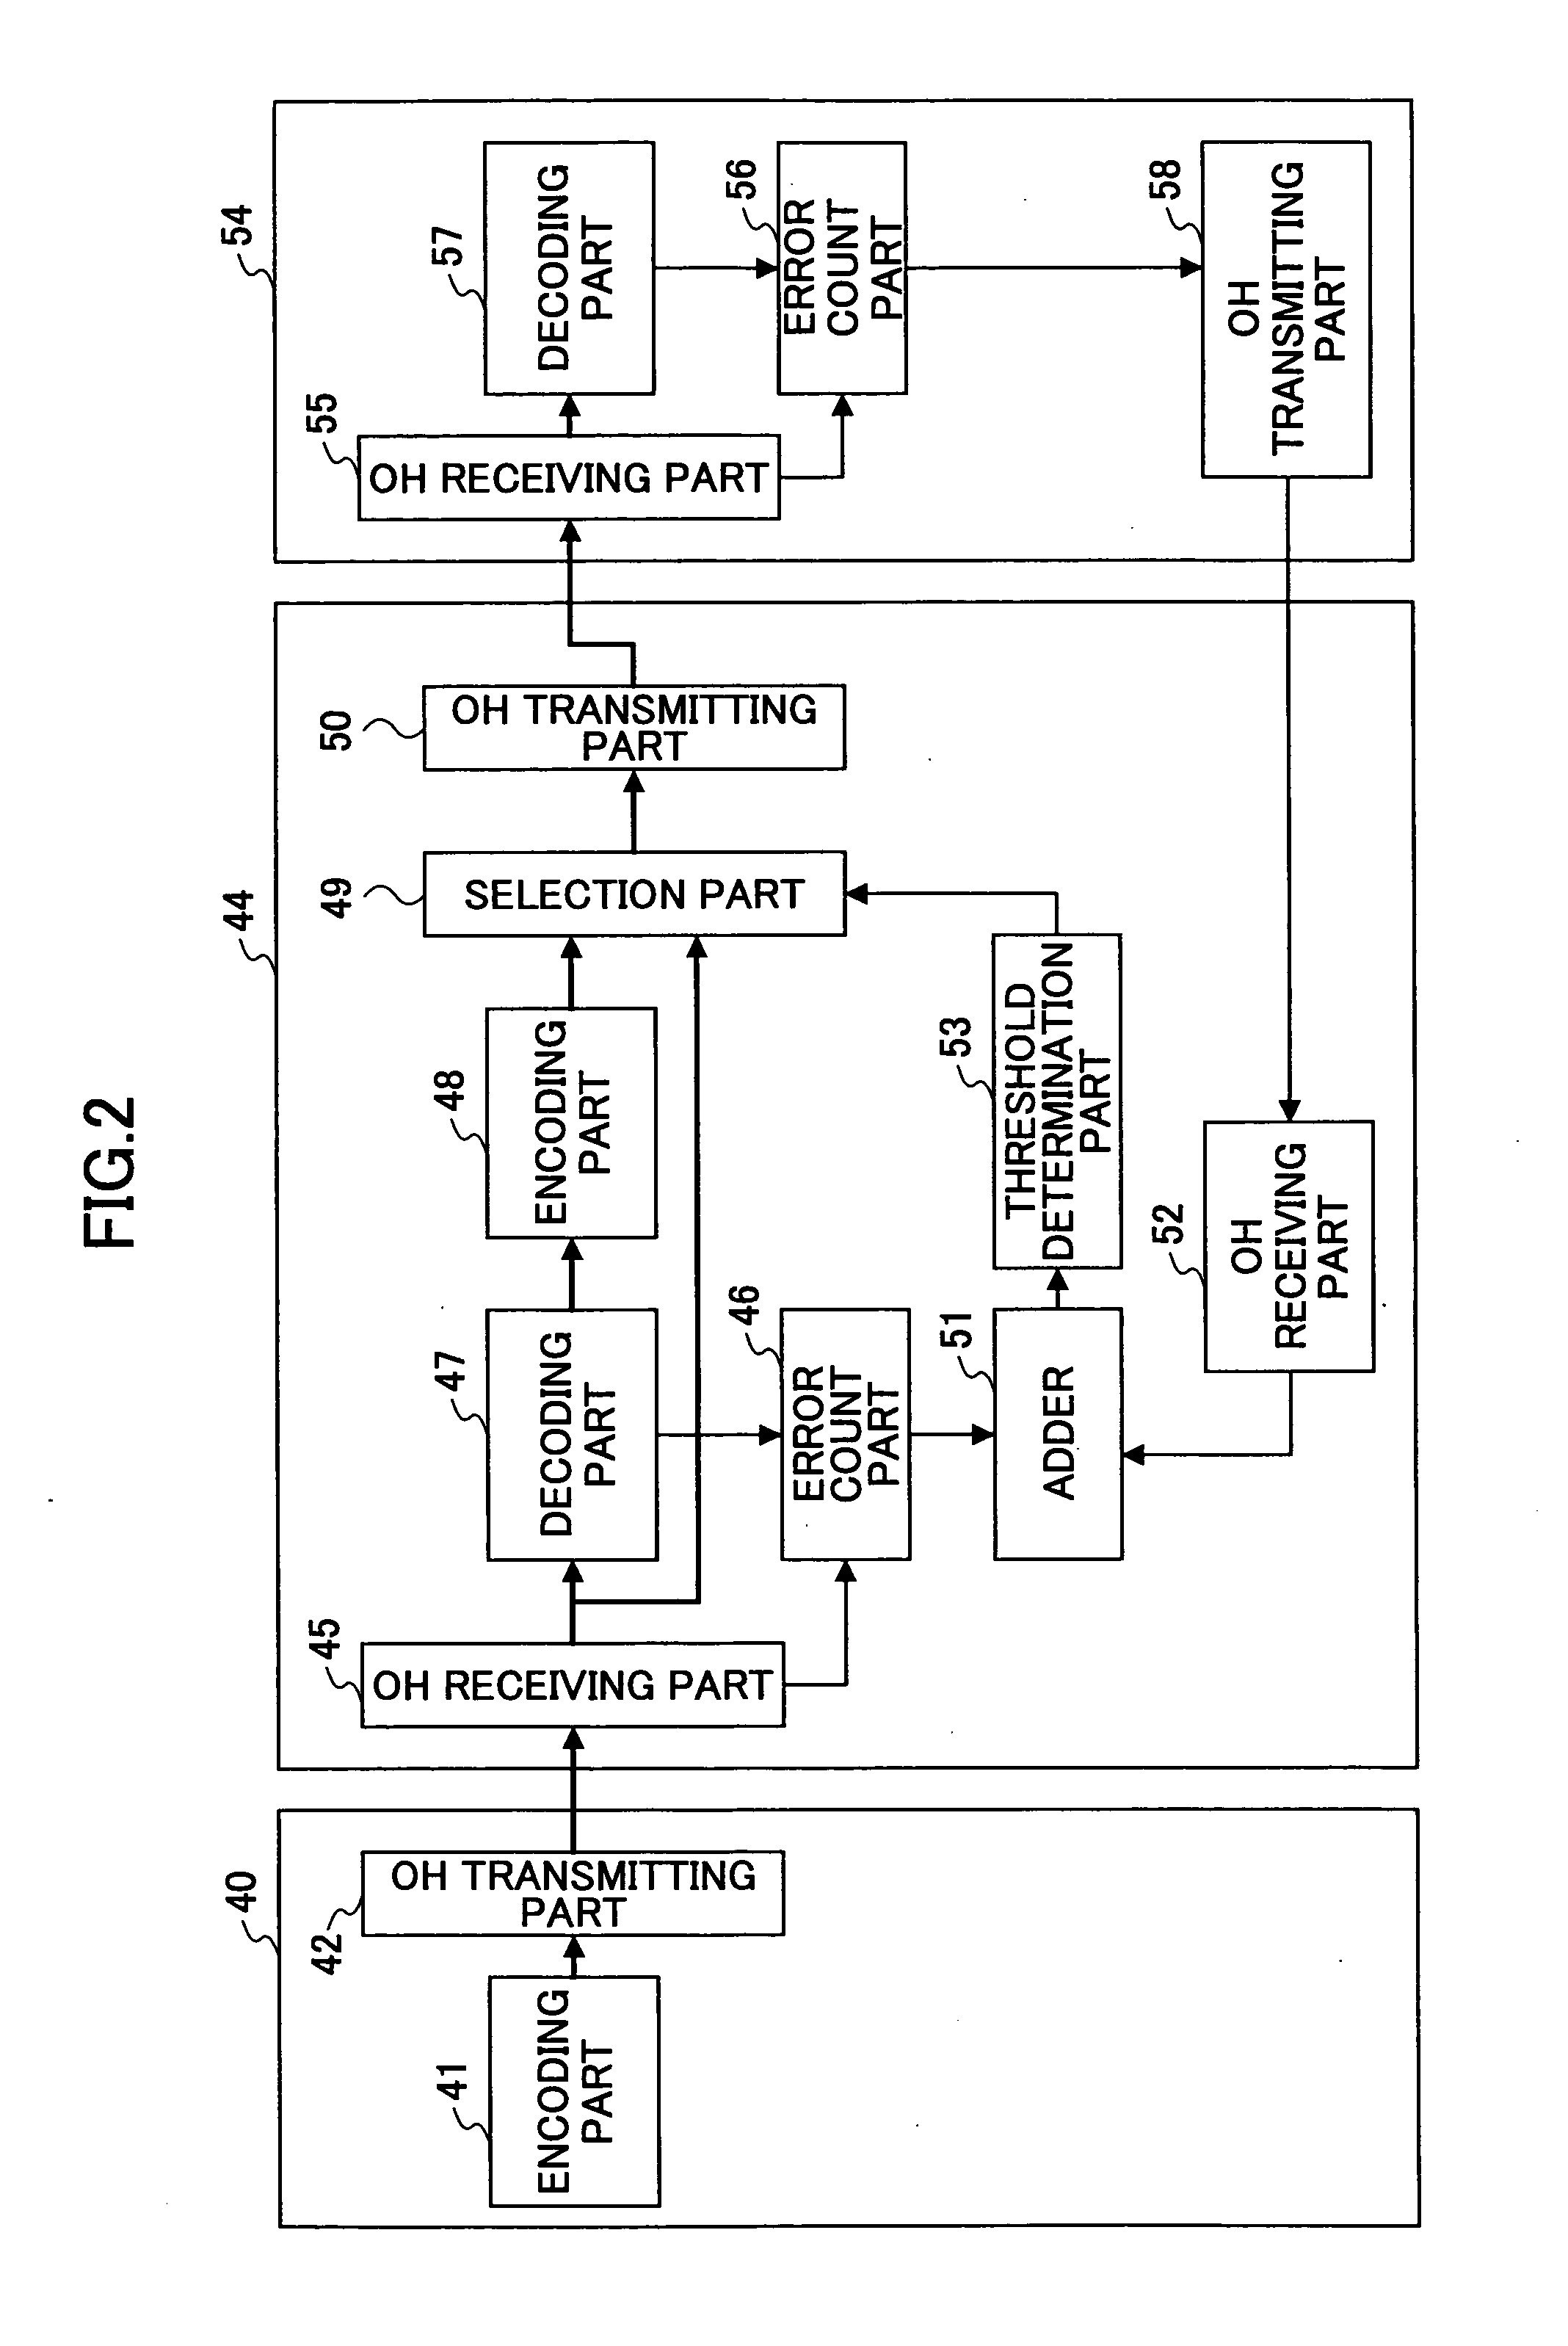 Regenerative relay system and regenerative relay apparatus